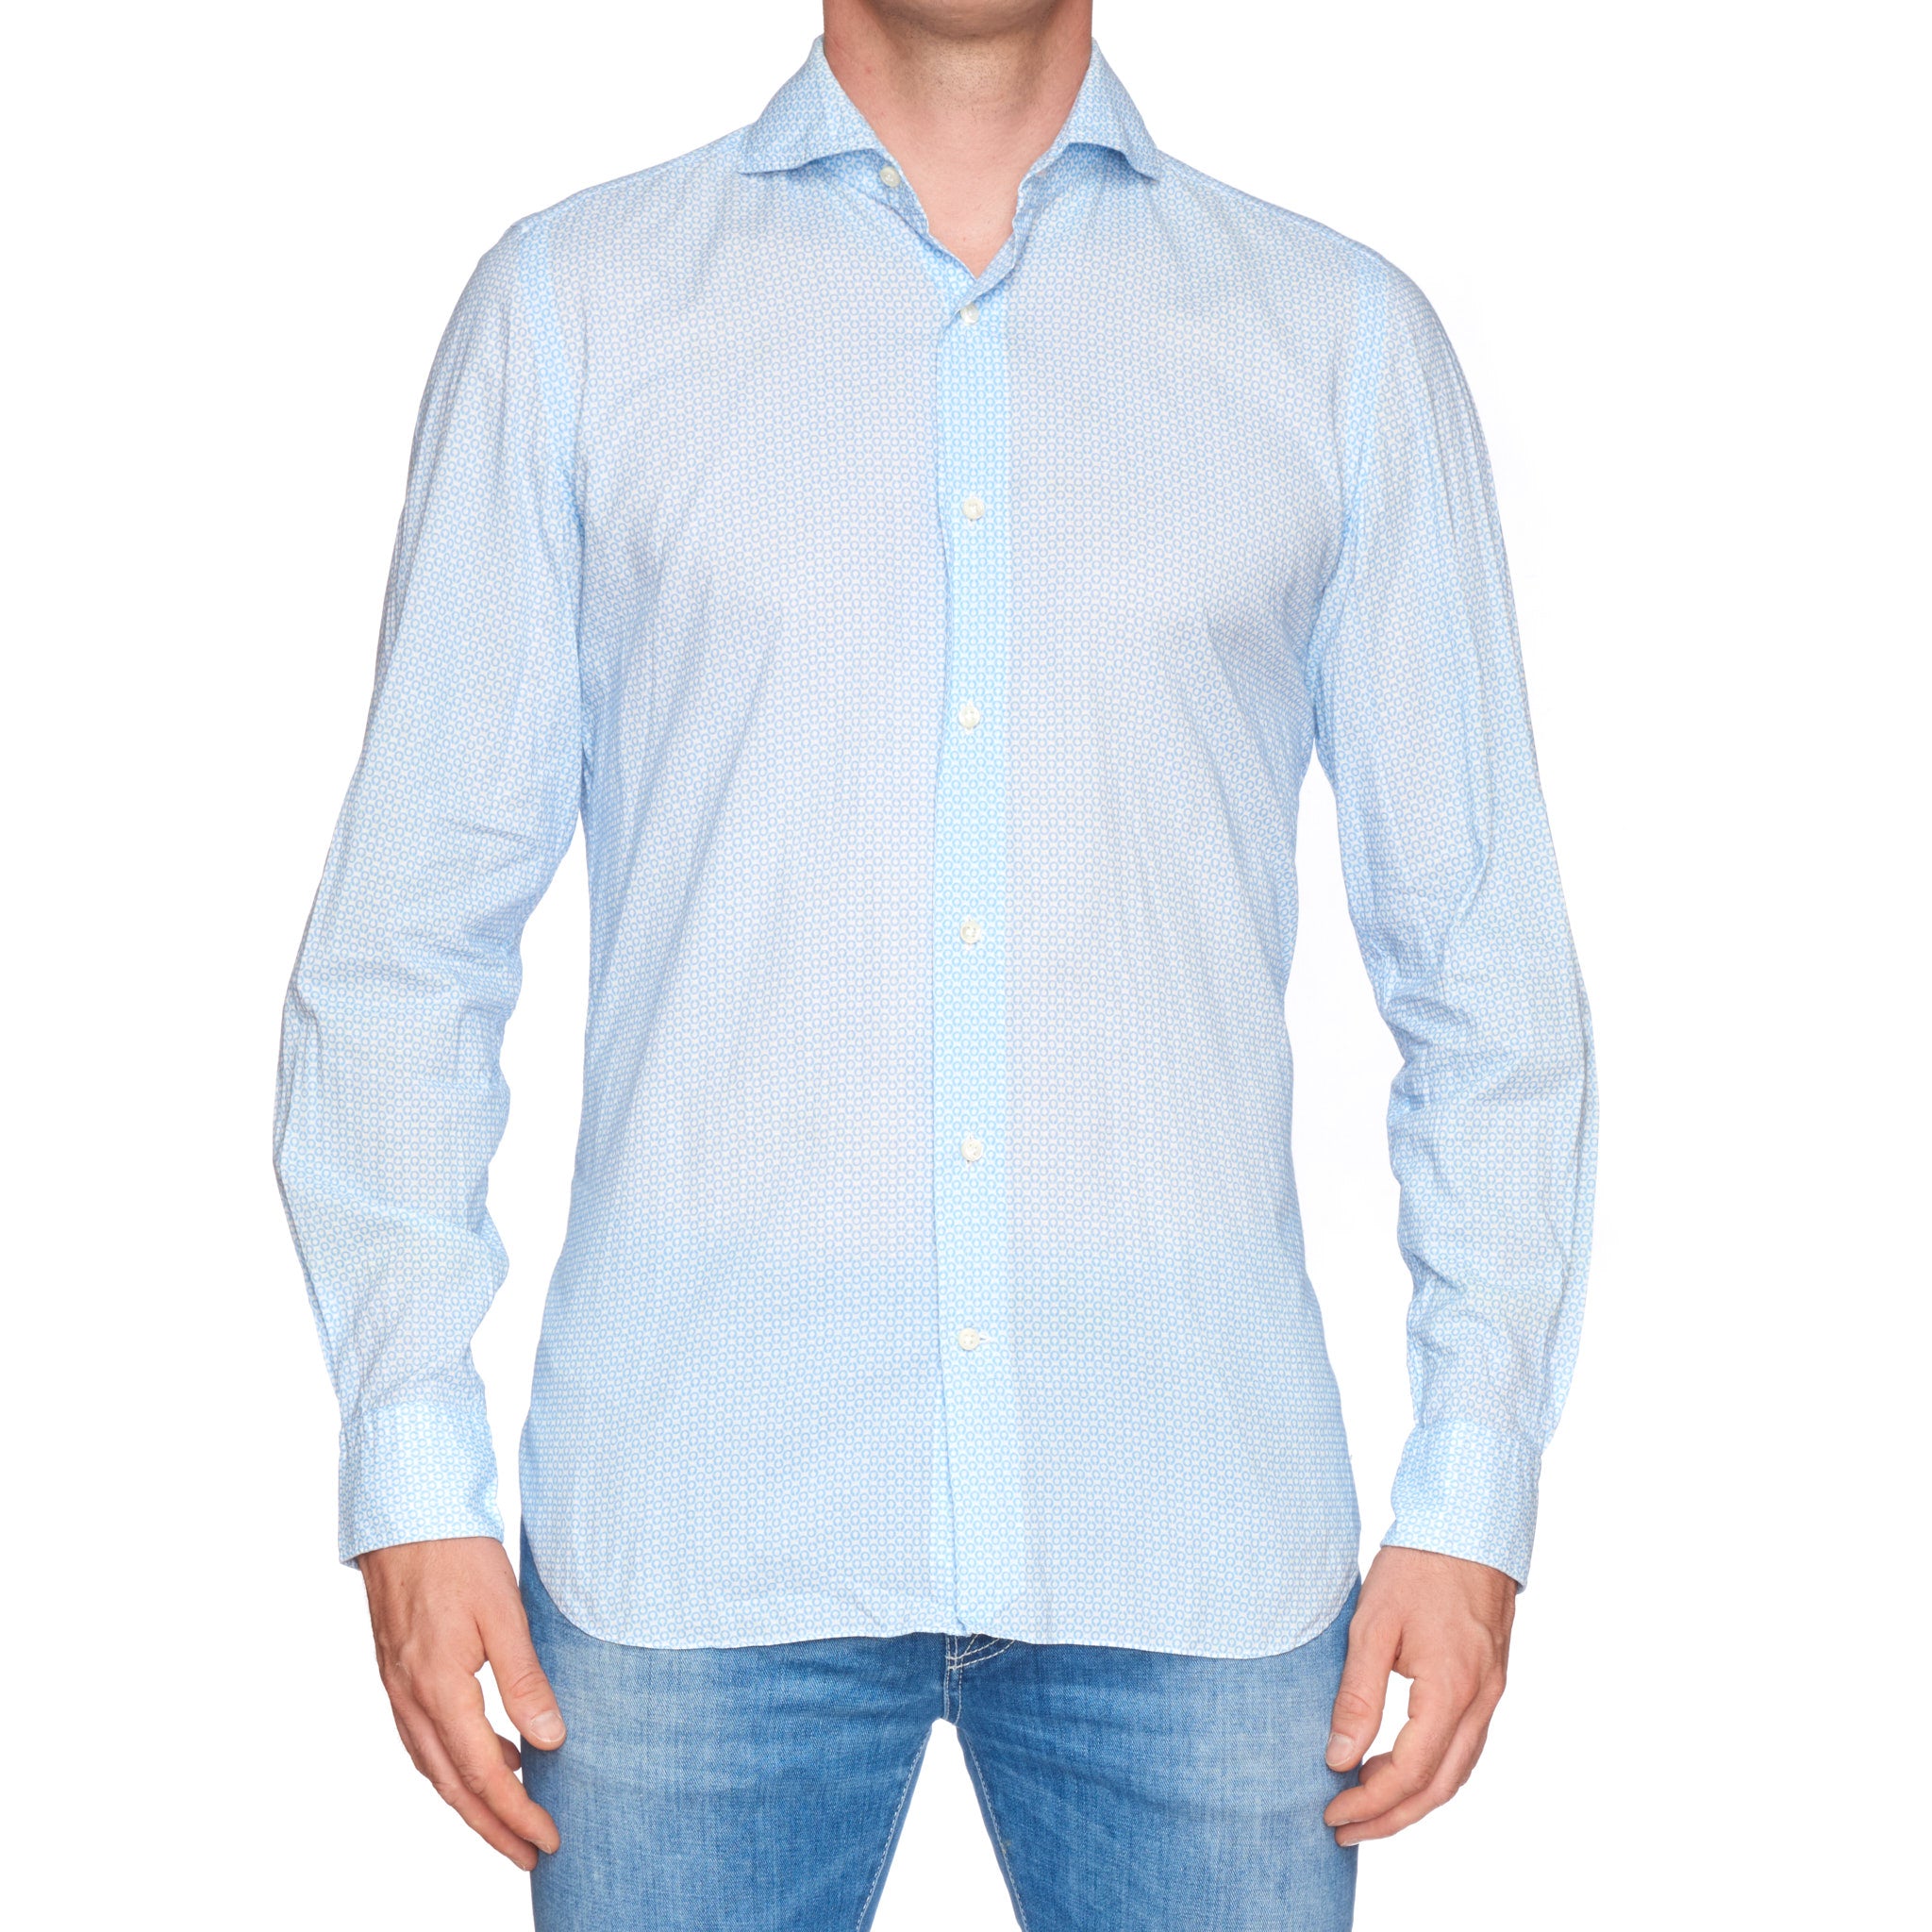 VINCENZO DI RUGGIERO Handmade Blue Circle Cotton Casual Shirt EU 40 US 15.75 VINCENZO DI RUGGIERO